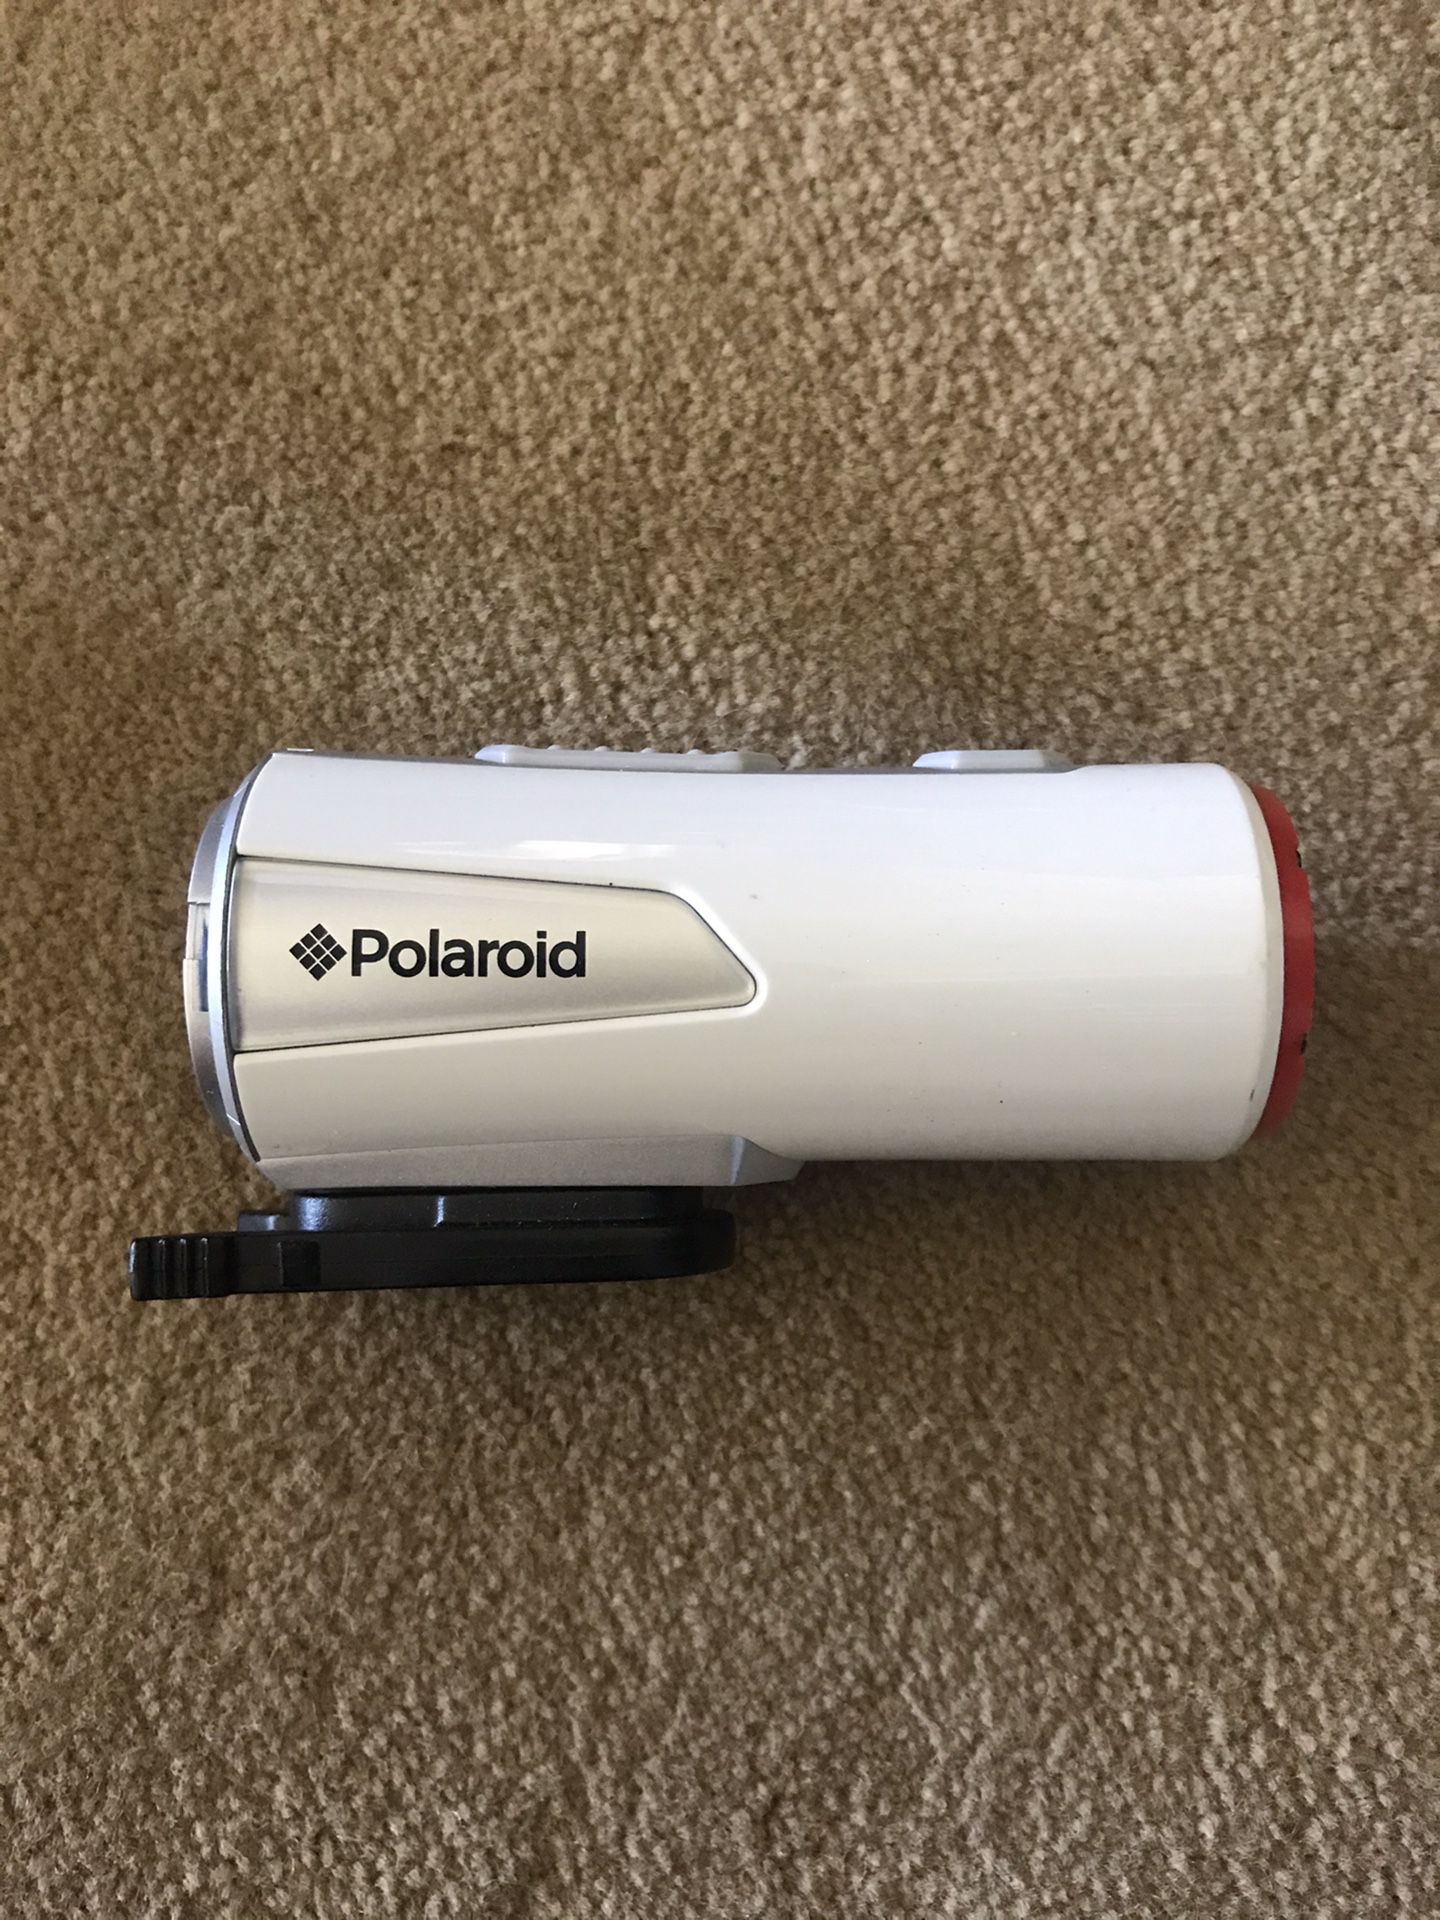 Polaroid camera in very good condition